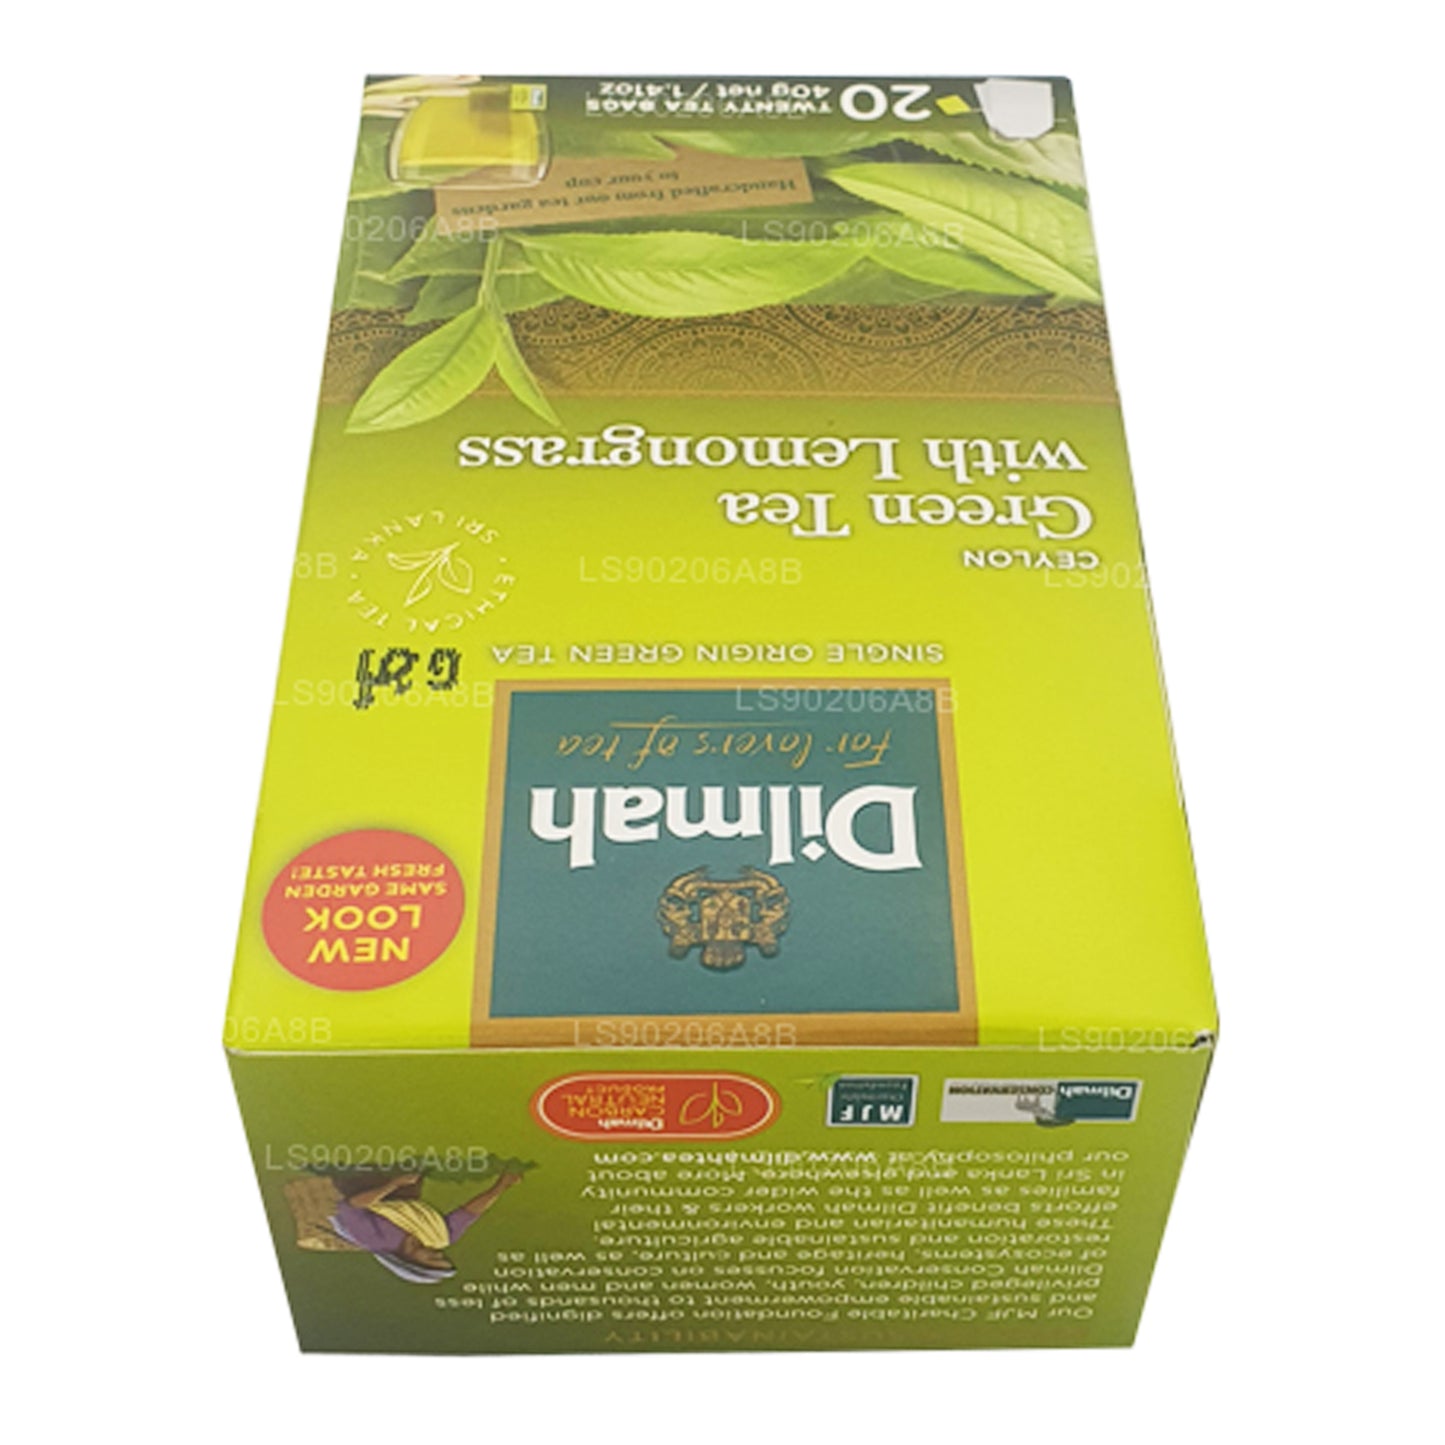 Dilmah Pure Ceylon Green Tea with Lemongrass Tea (40g) 20 Tea Bags